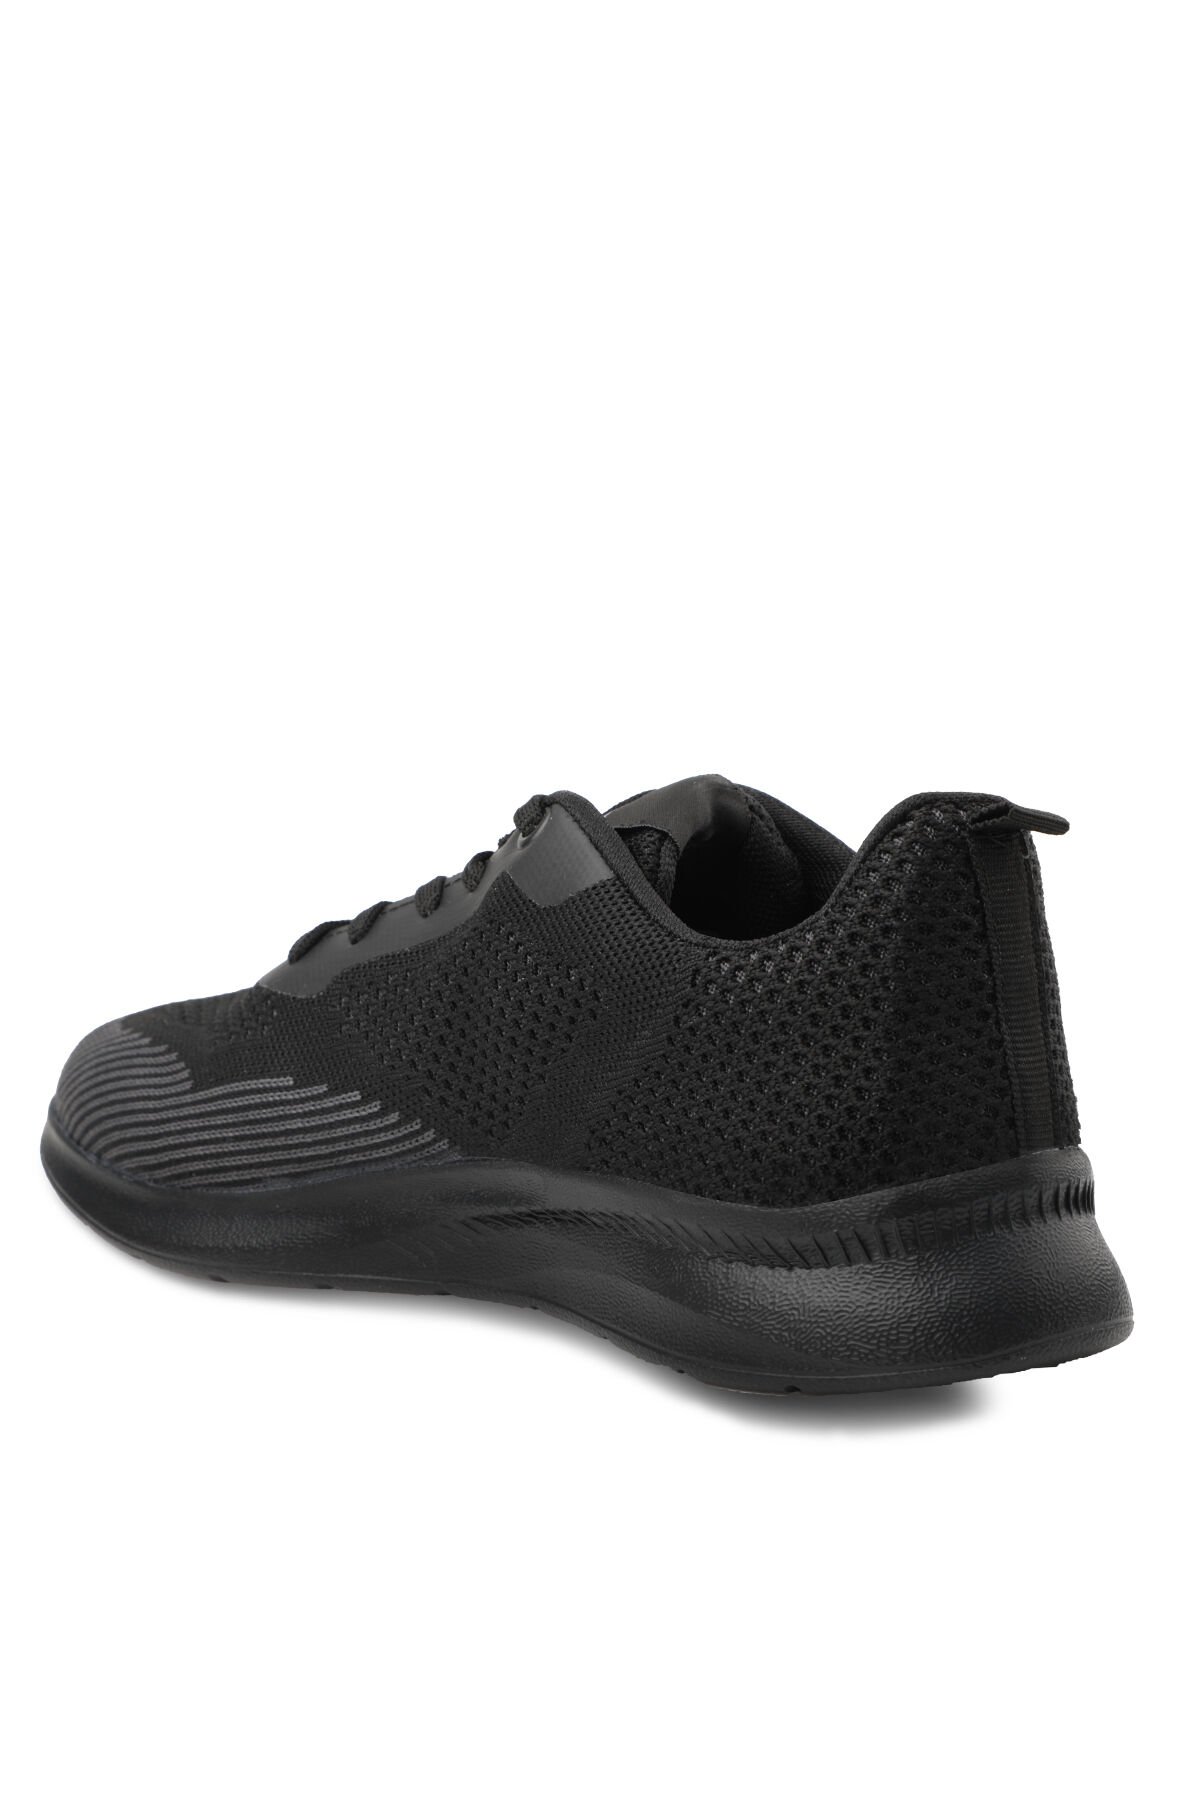 Slazenger ADWOA I Sneaker Erkek Ayakkabı Siyah / Siyah - Thumbnail